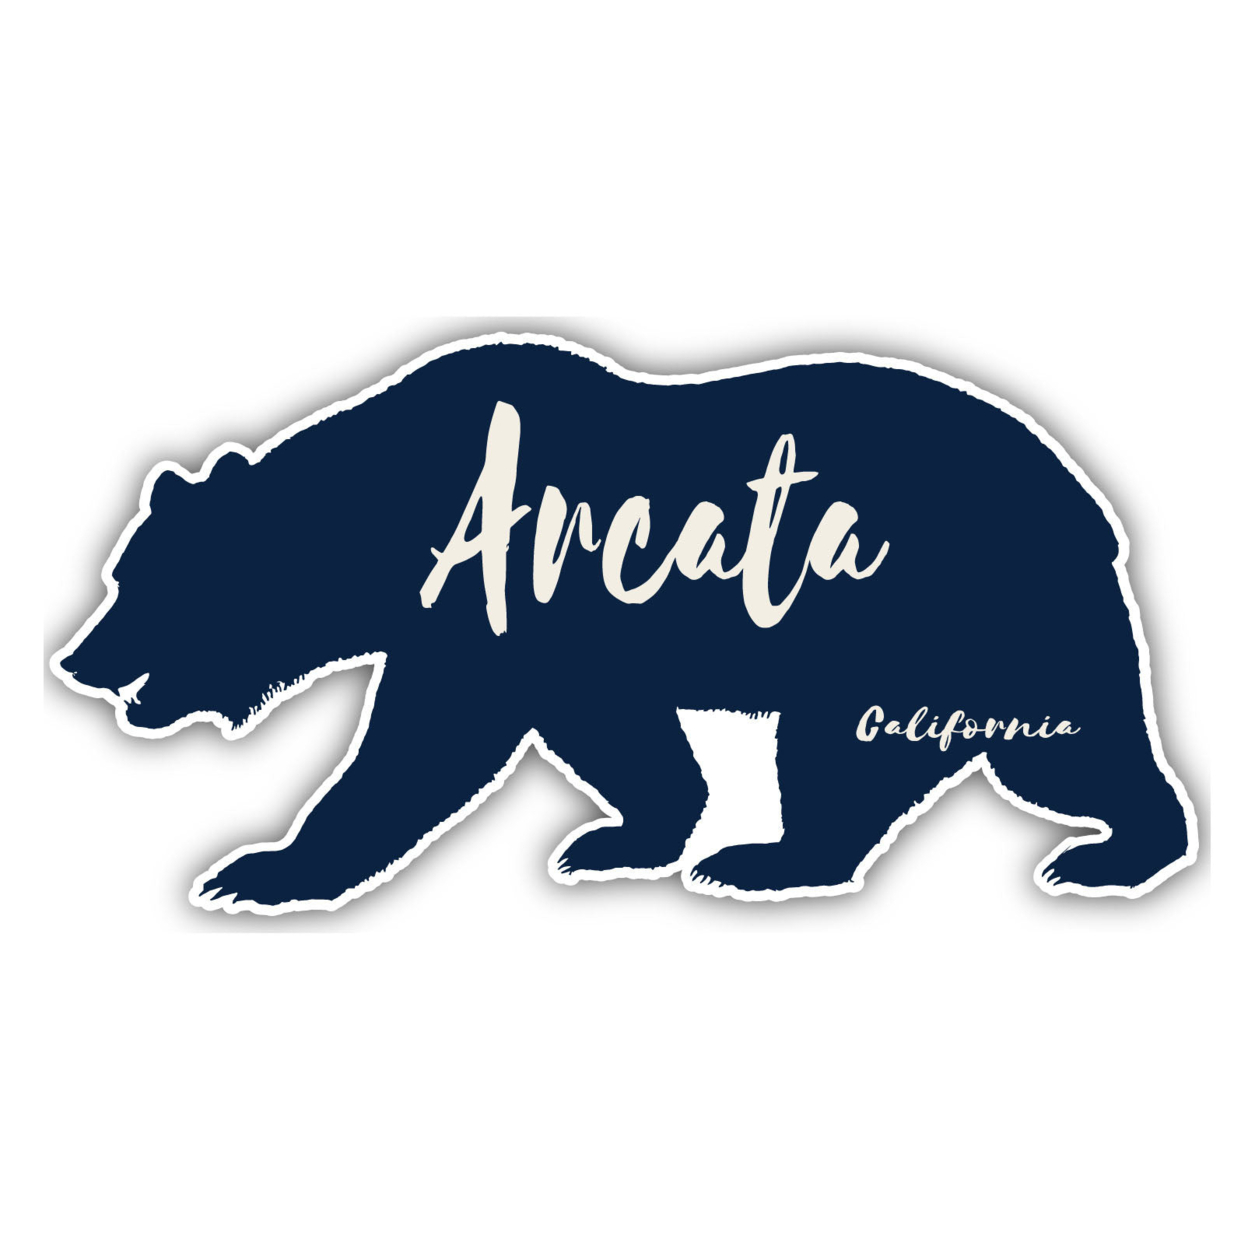 Arcata California Souvenir Decorative Stickers (Choose Theme And Size) - 4-Pack, 8-Inch, Bear